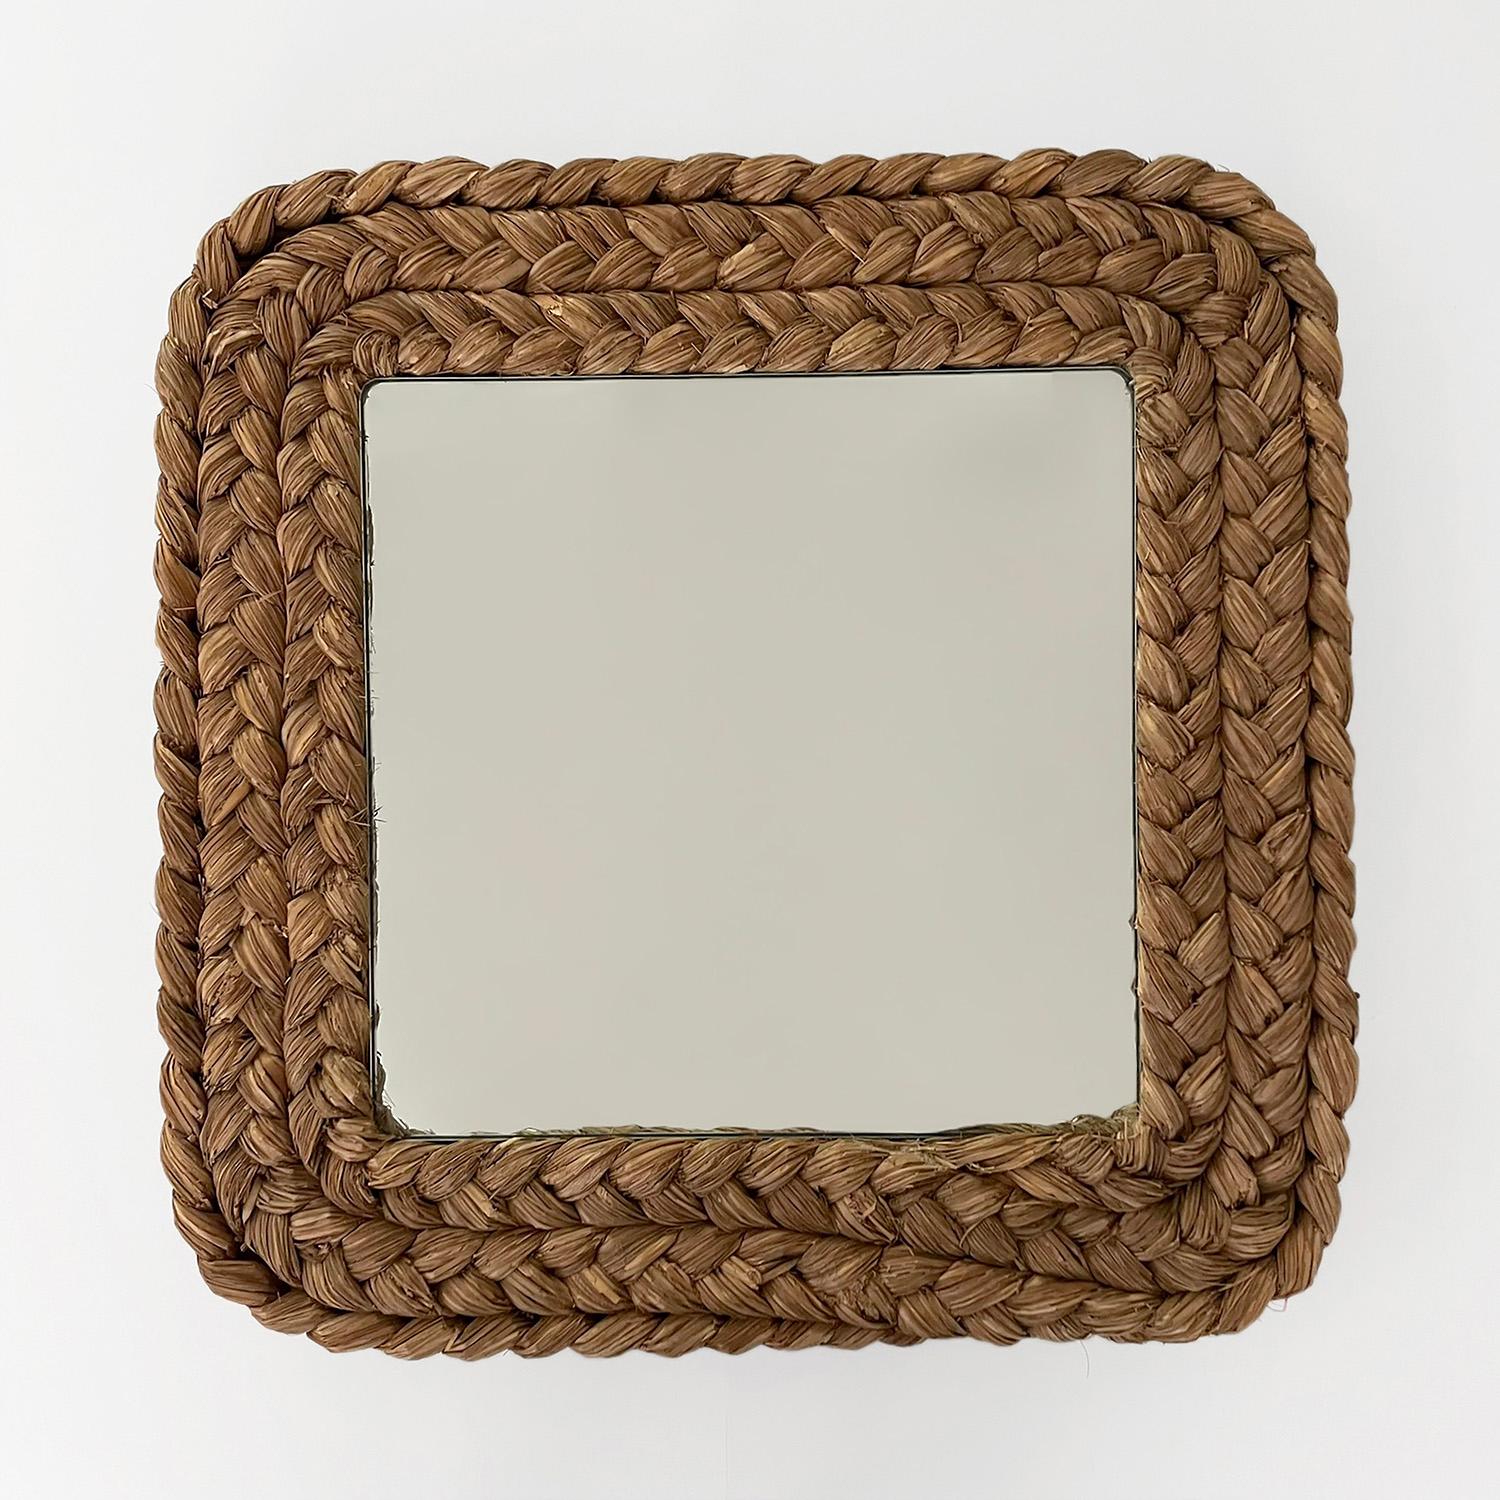 rectangular rope mirror